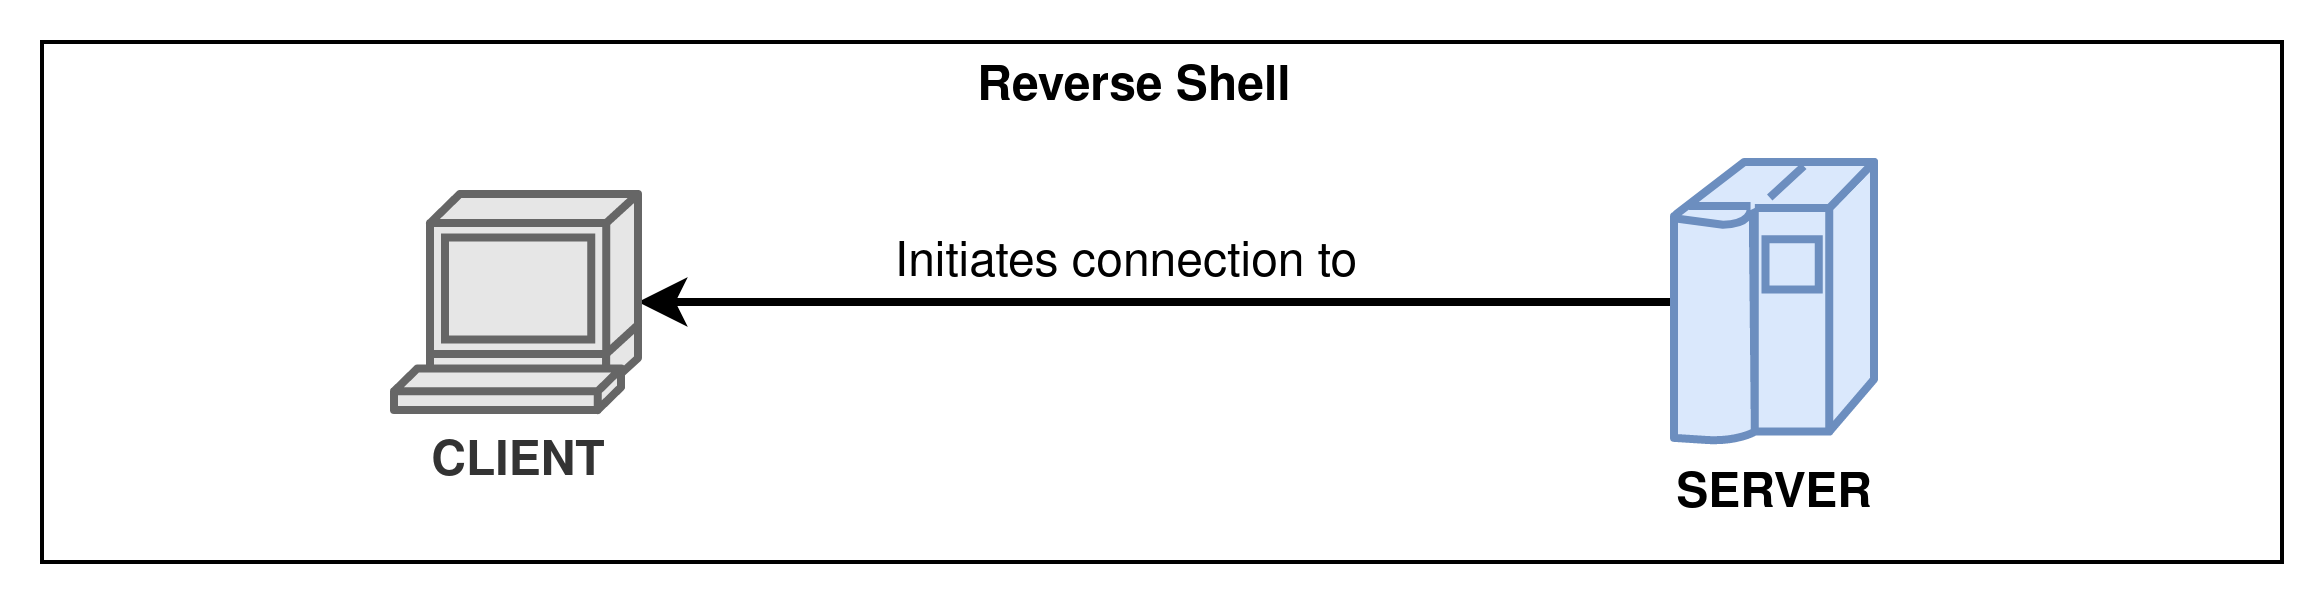 reverse shell ssh